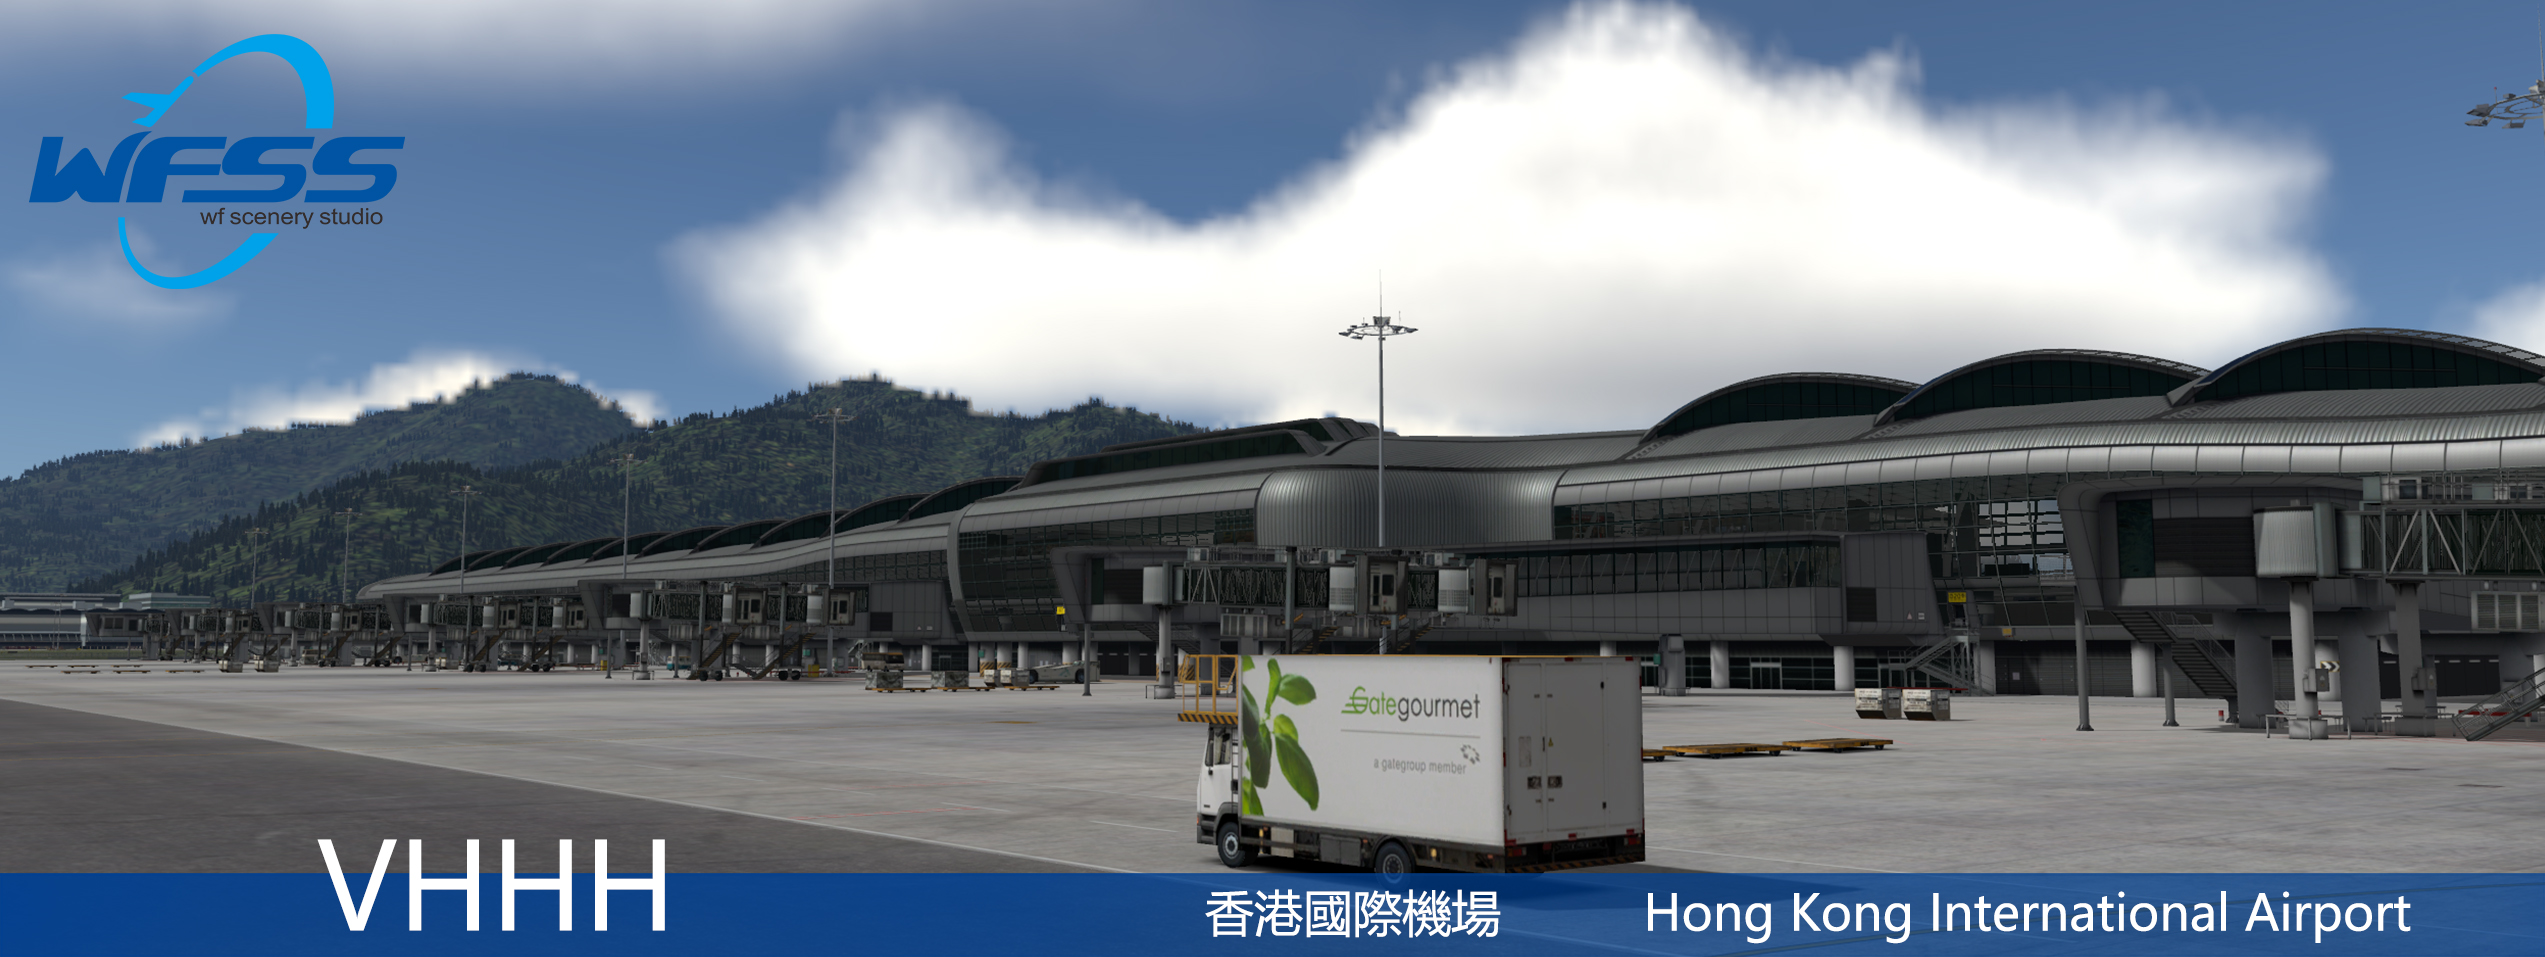 WFSS-香港国际机场发布-3227 